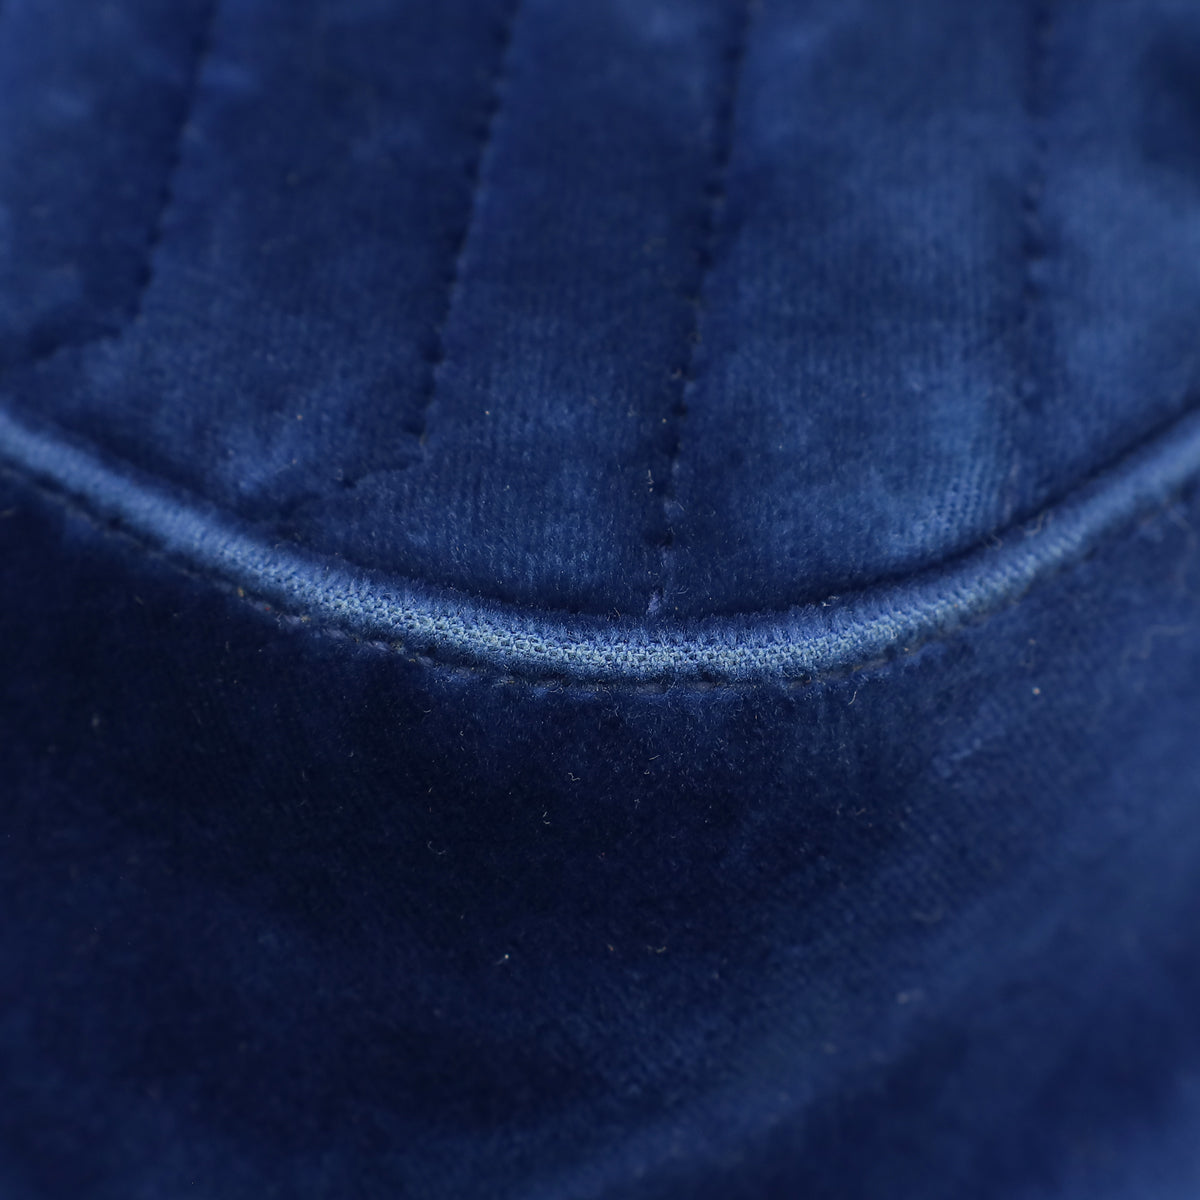 Gucci Navy Blue GG Marmont Velvet Small Shoulder Bag